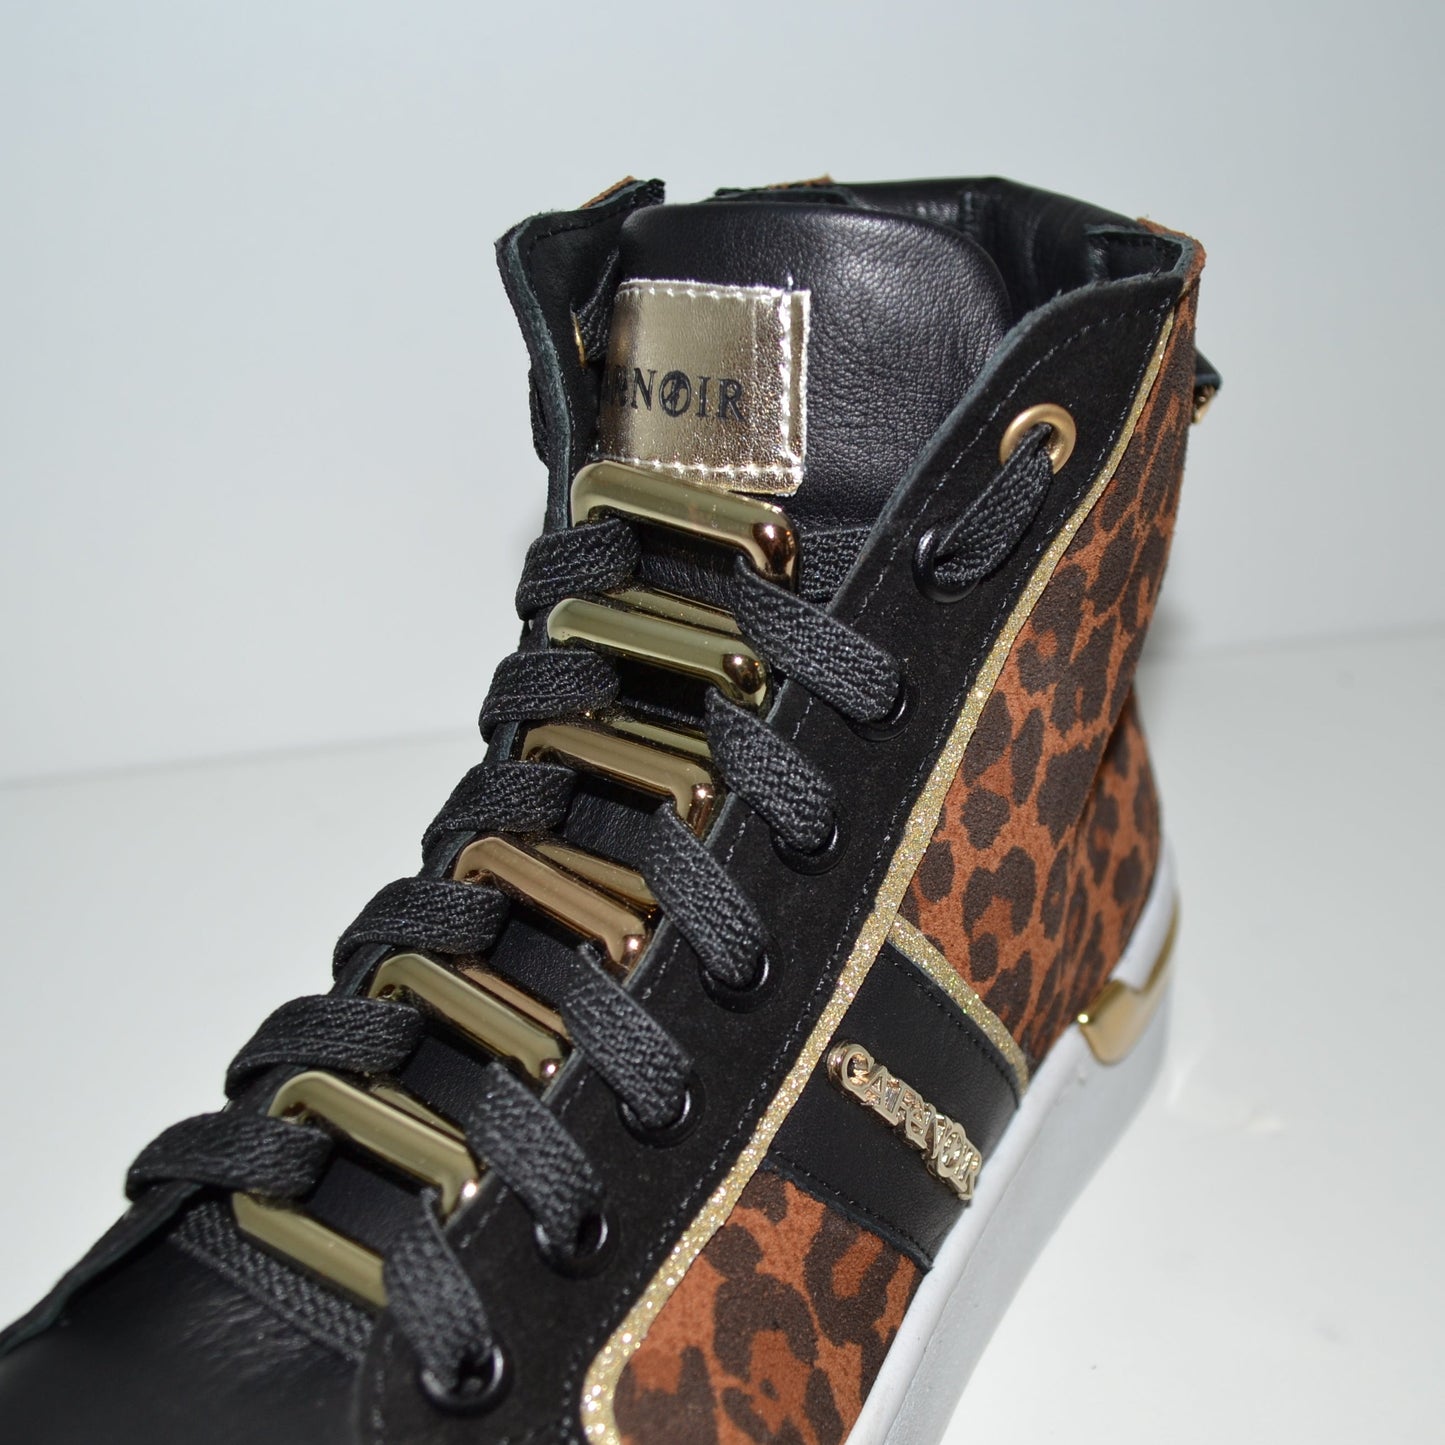 Sneakers CafèNoir woman black and animalier leather